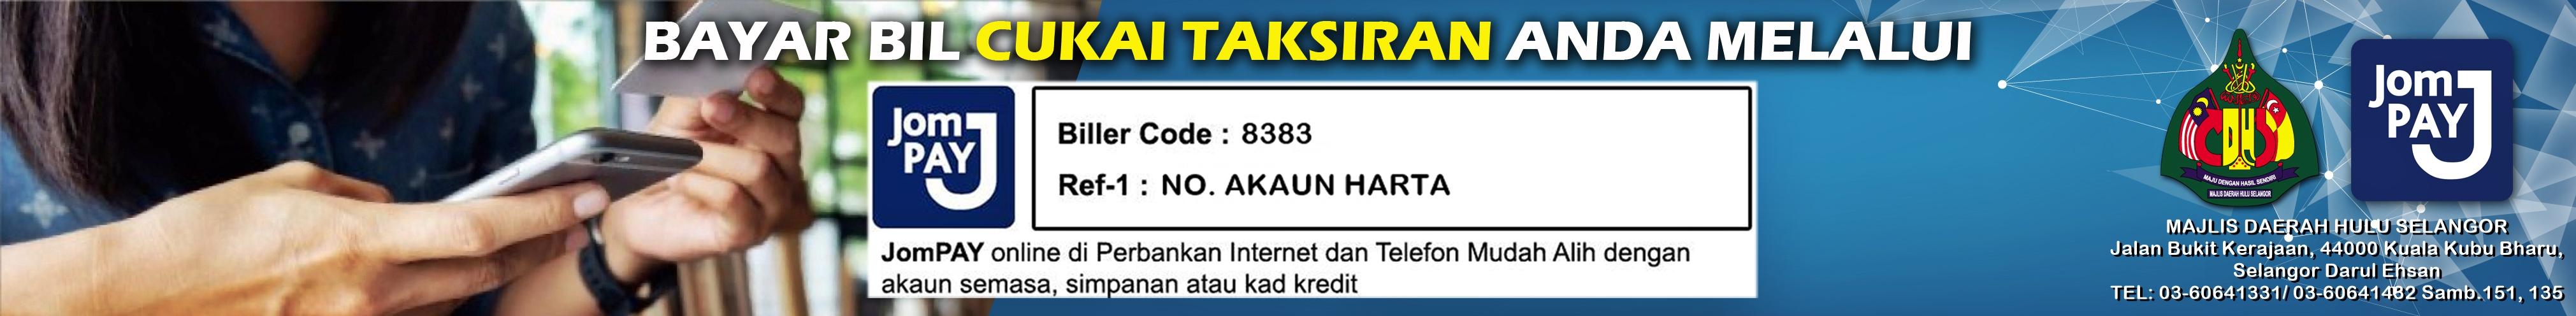 Bayar Cukai Taksiran Online Selangor